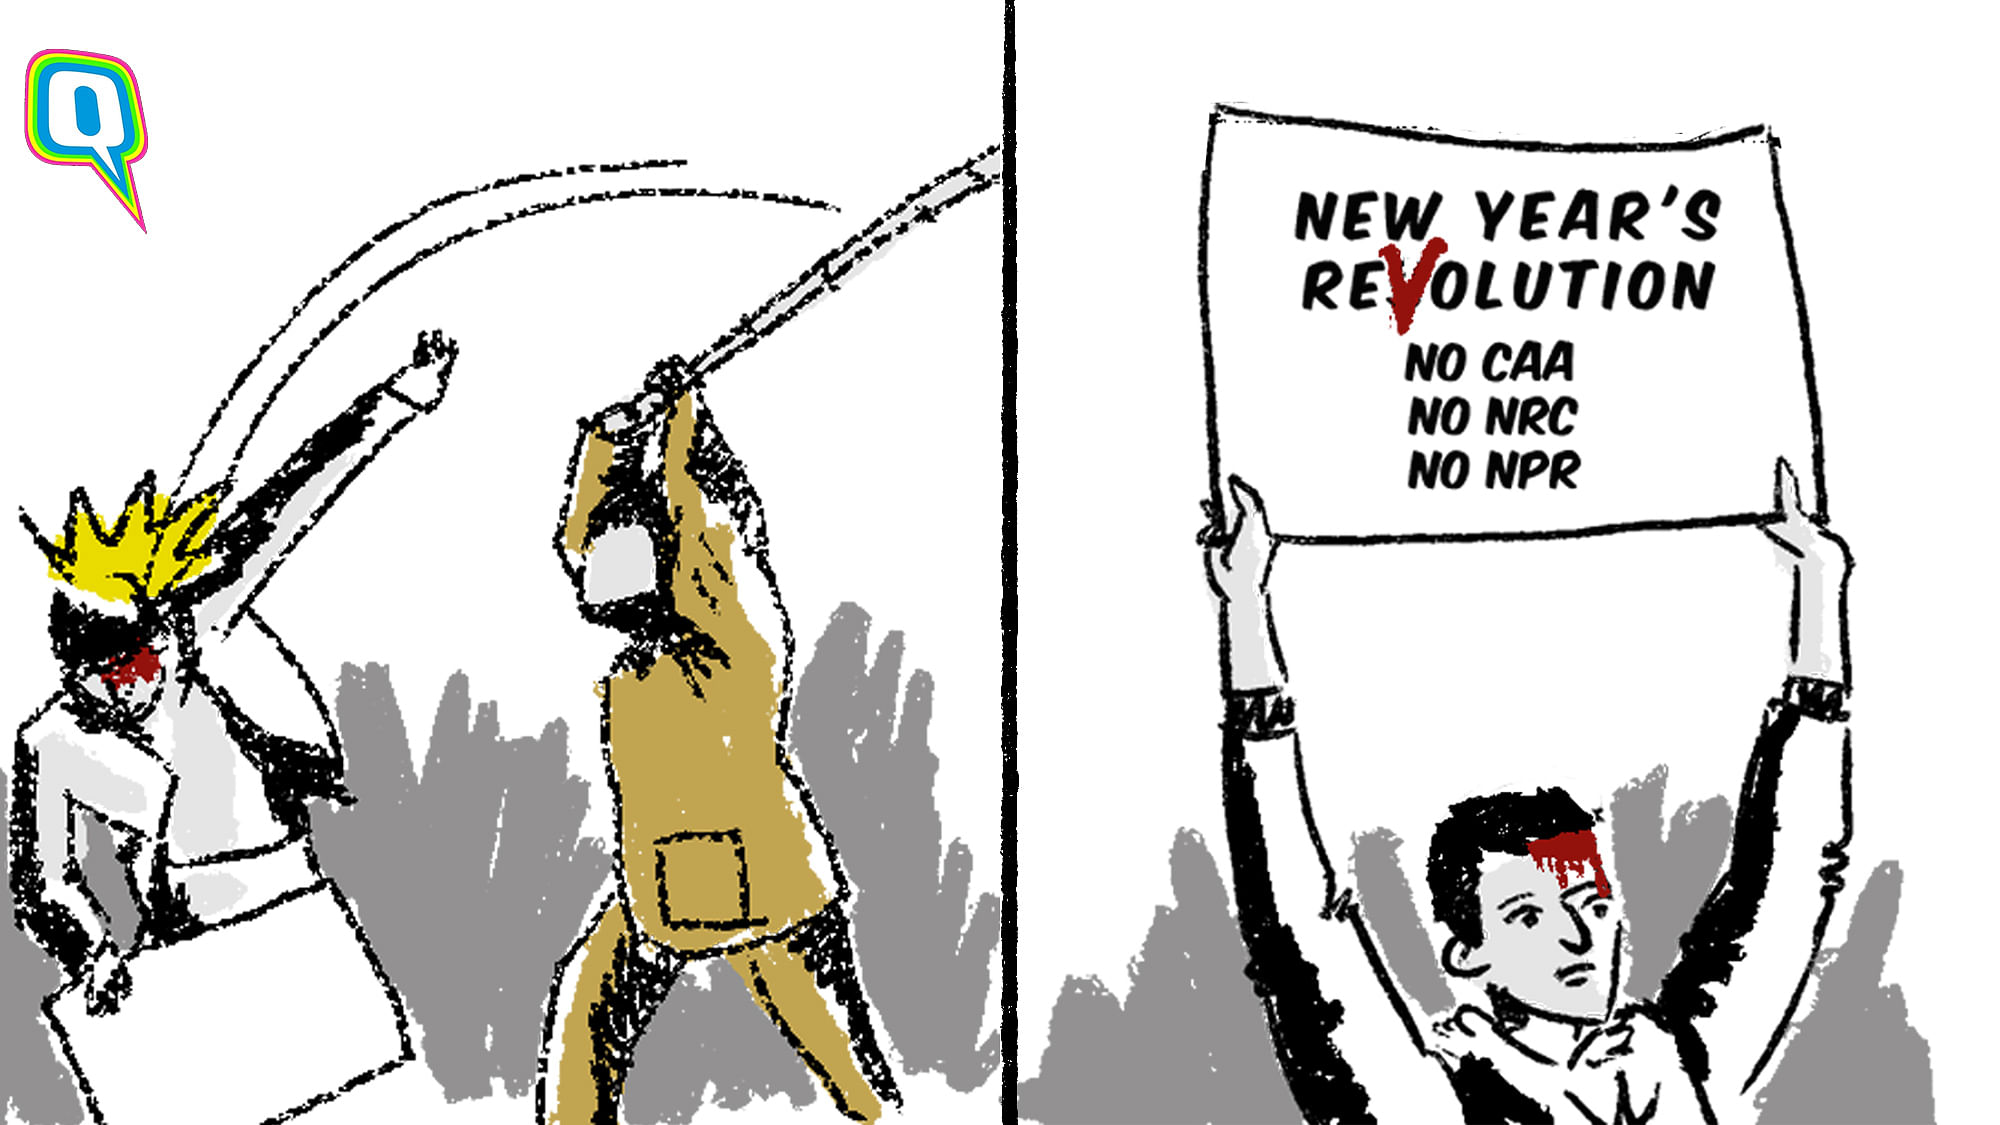 New Year’s Revolution.